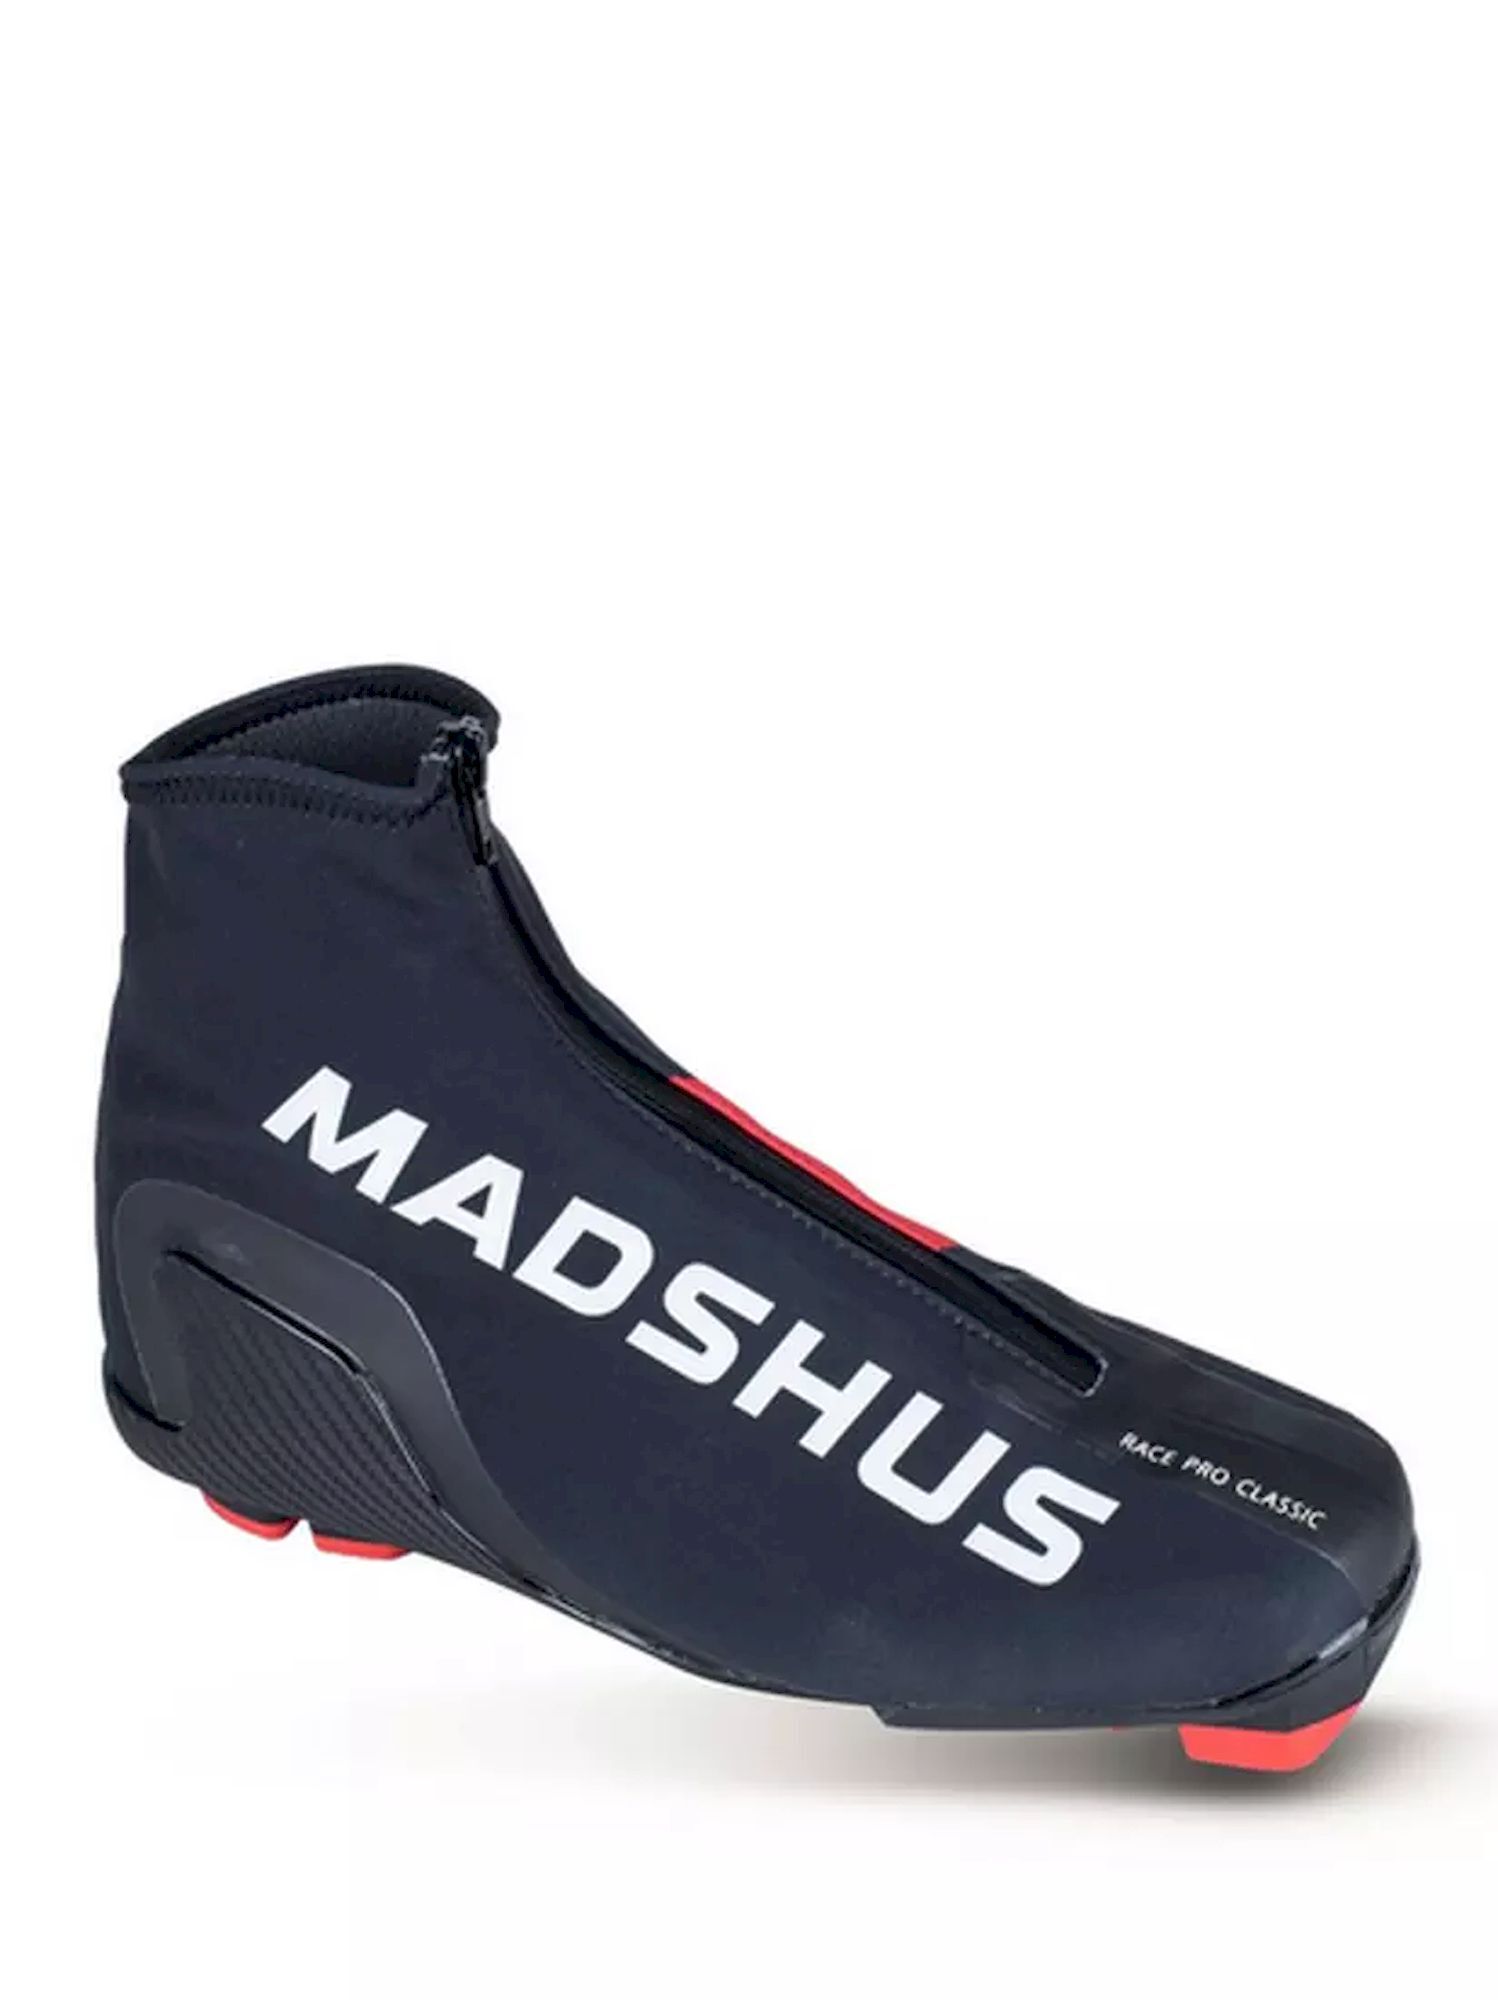 Madshus Race Pro Classic - Chaussures ski de fond | Hardloop